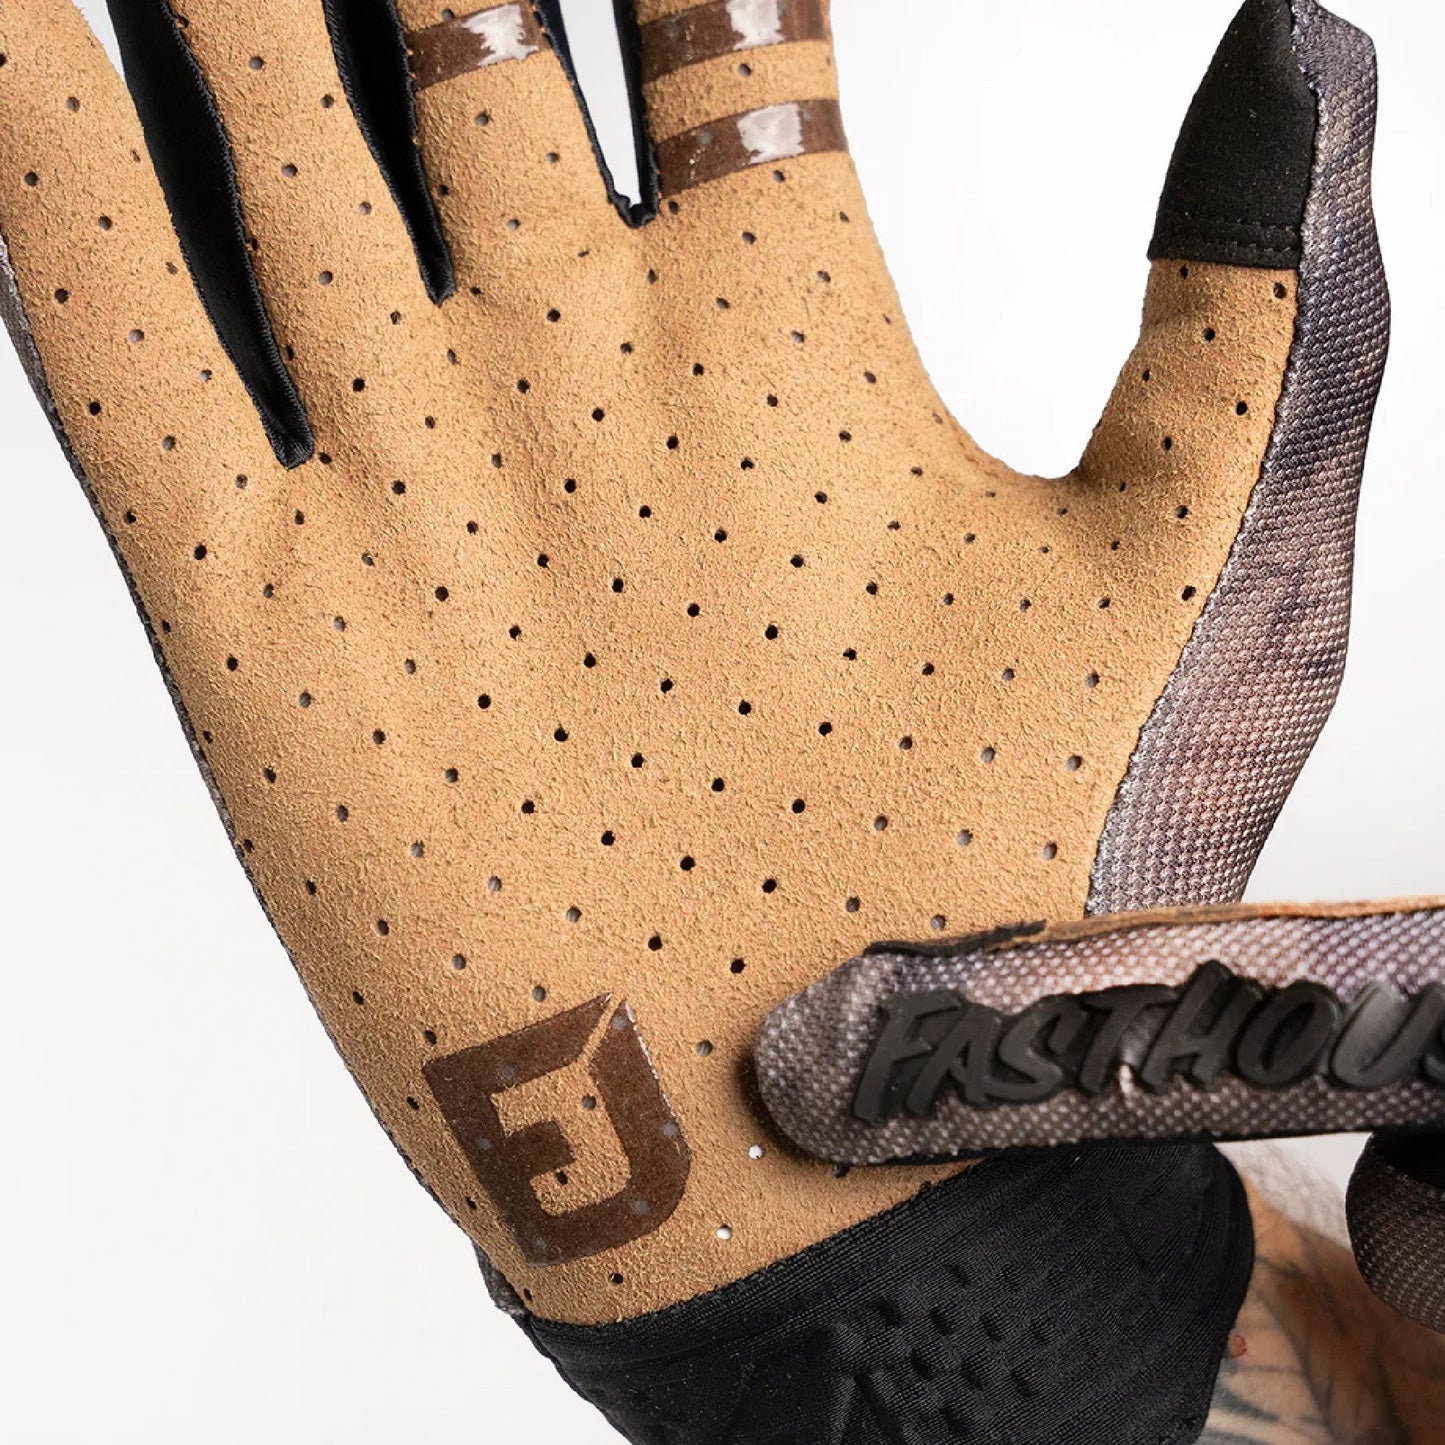 Fasthouse Emil Johansson Signature Blitz Glove Black Wash Bike Gloves